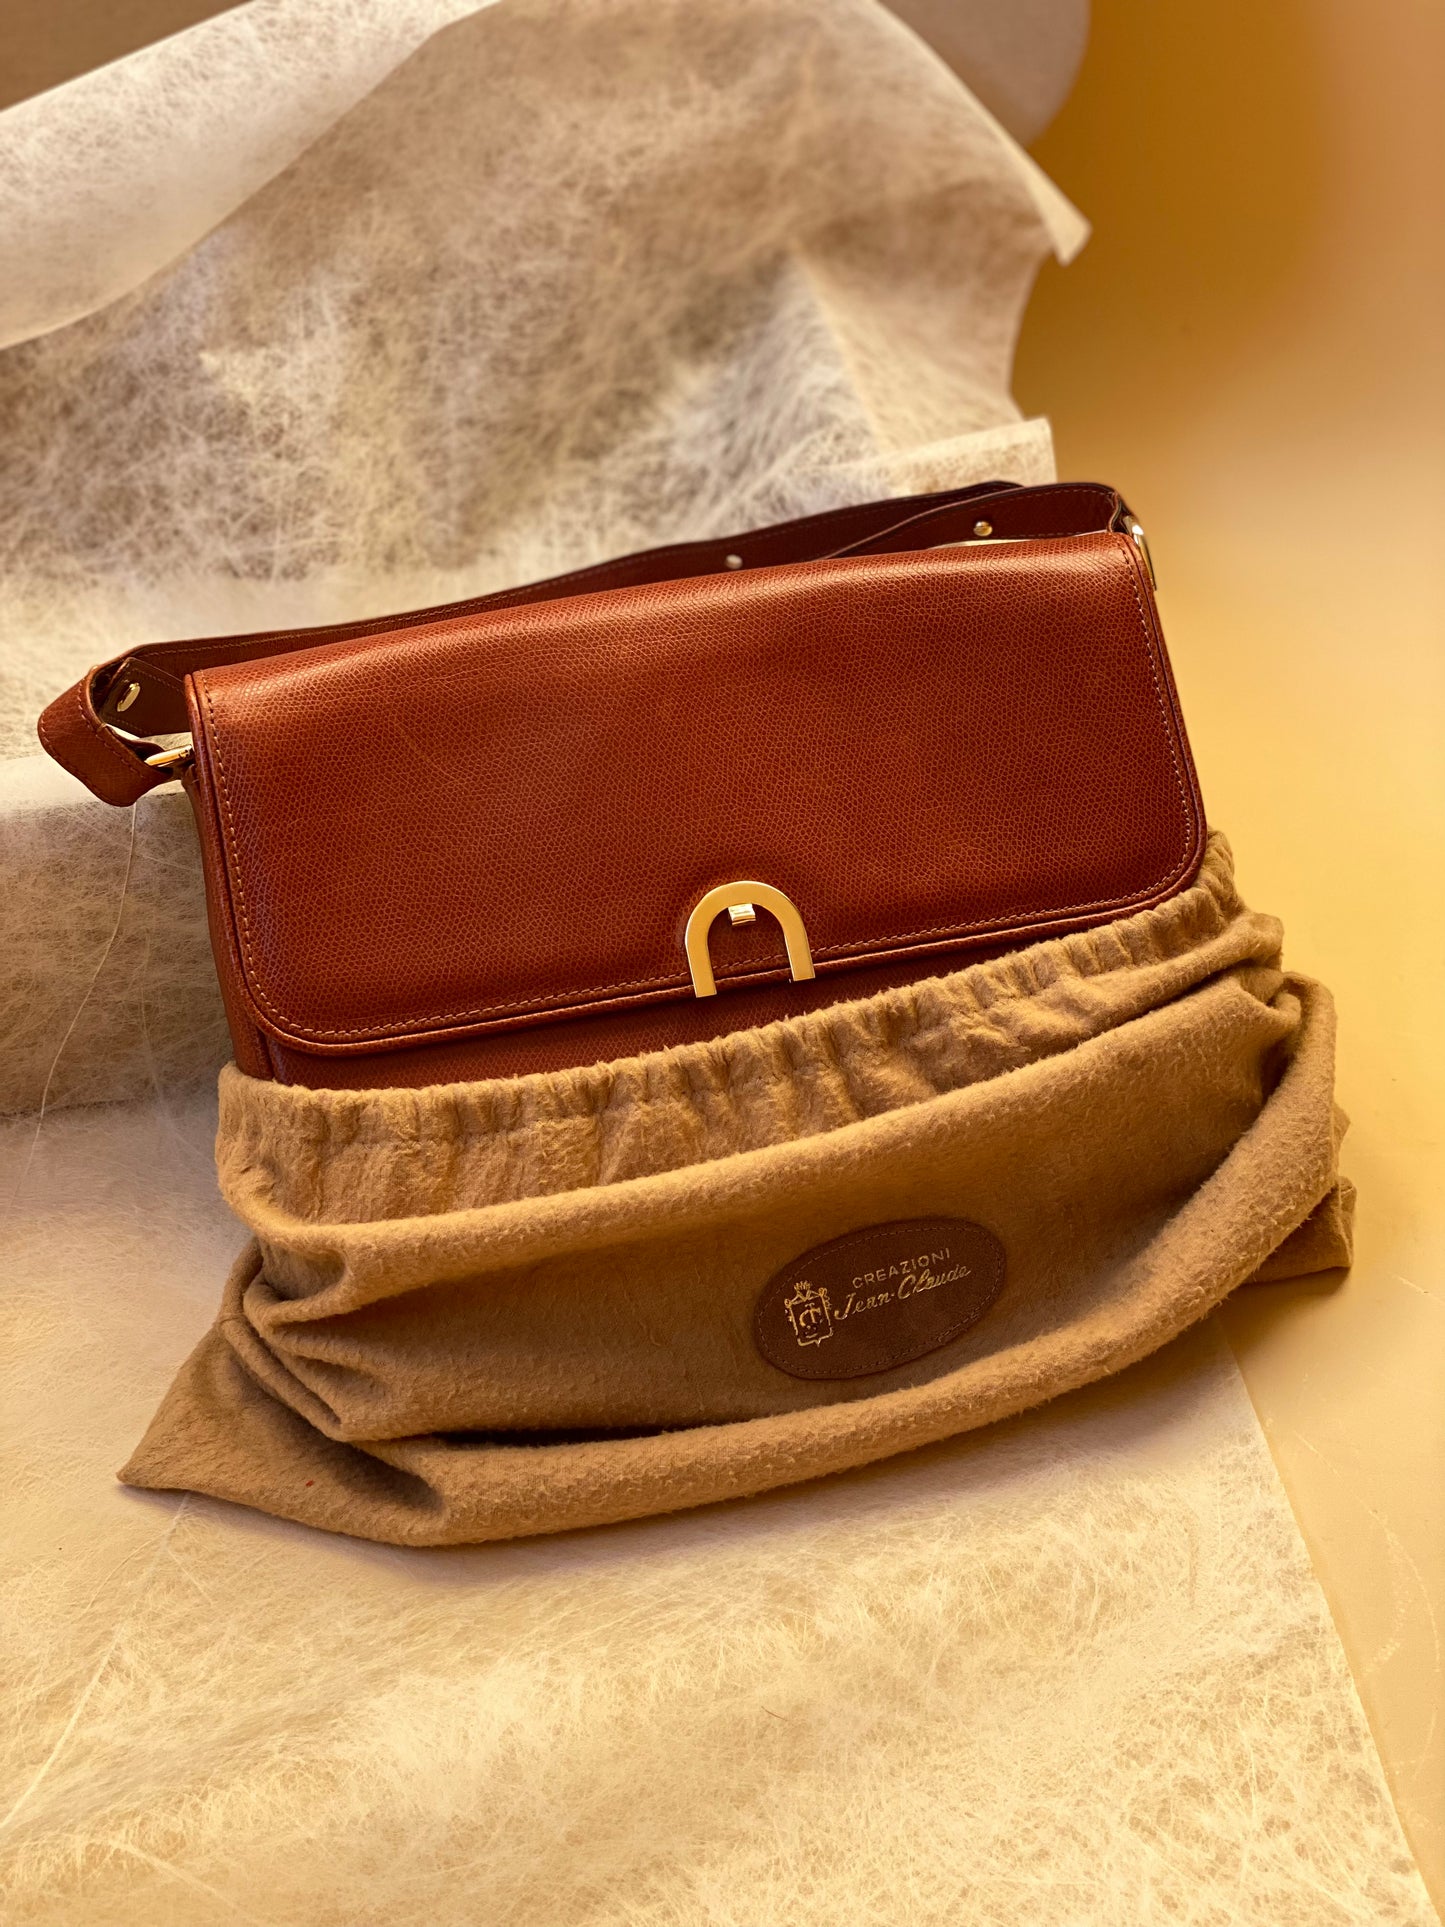 Vintage Caramel Brown Leather Handbag by Franzi 1864